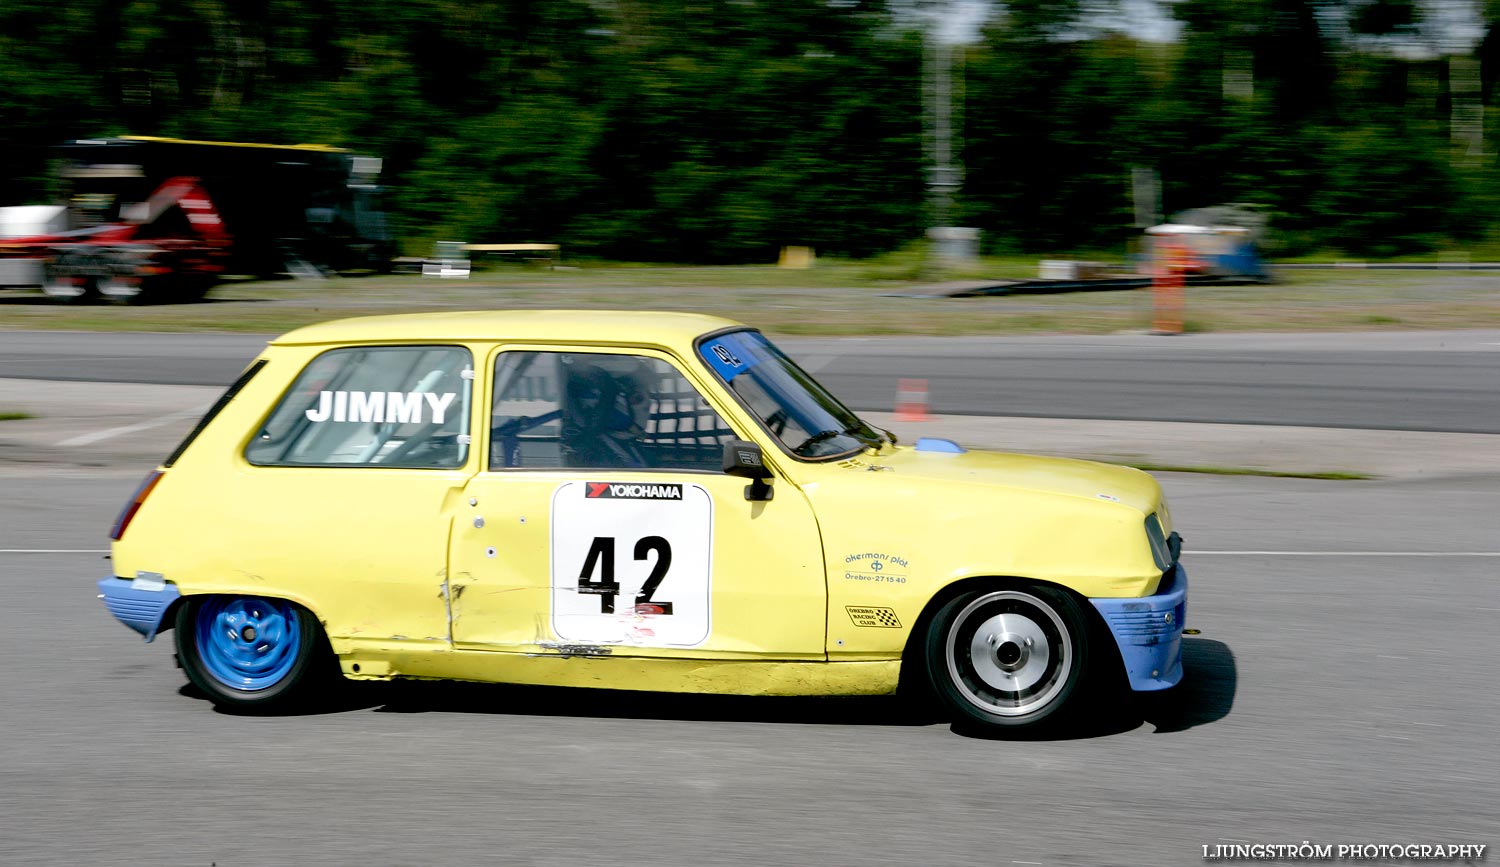 SSK Raceweek,mix,Kinnekulle Ring,Götene,Sverige,Motorsport,,2009,107649